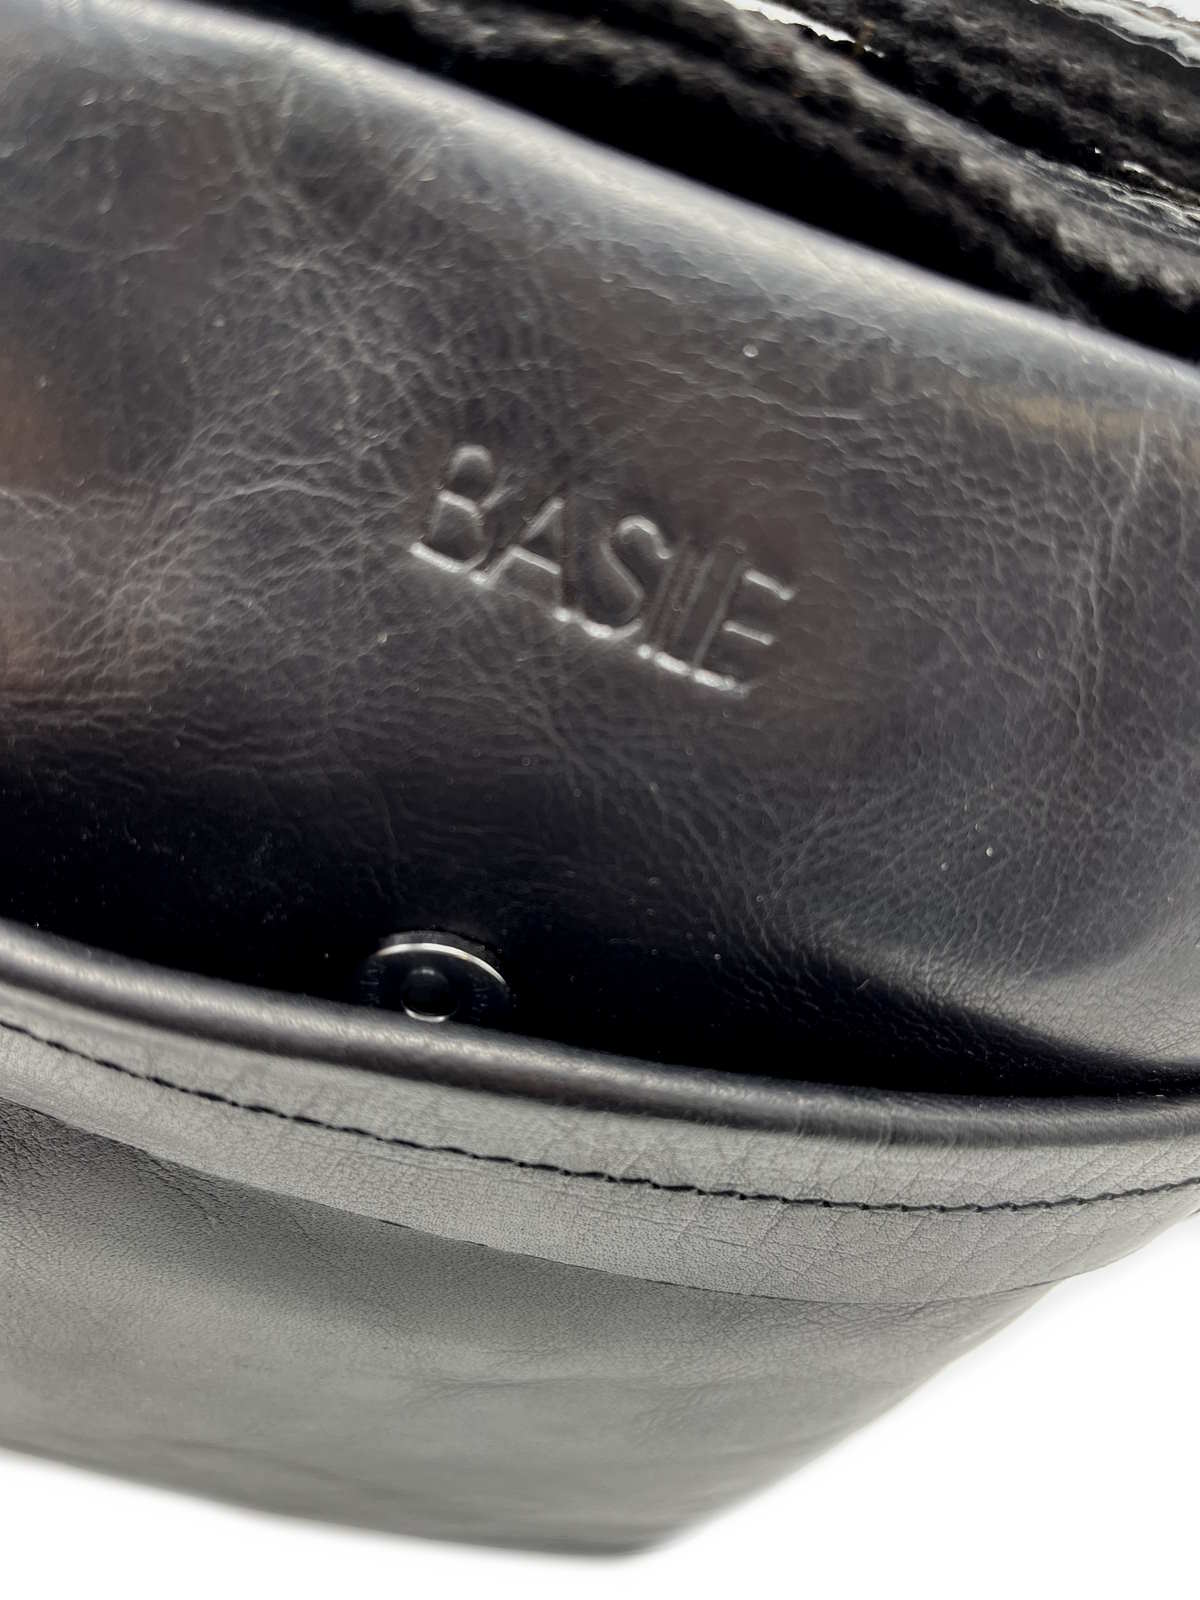 Brand Basile, Genuine Leather Messenger Bag, for men, art. 2883TI.392